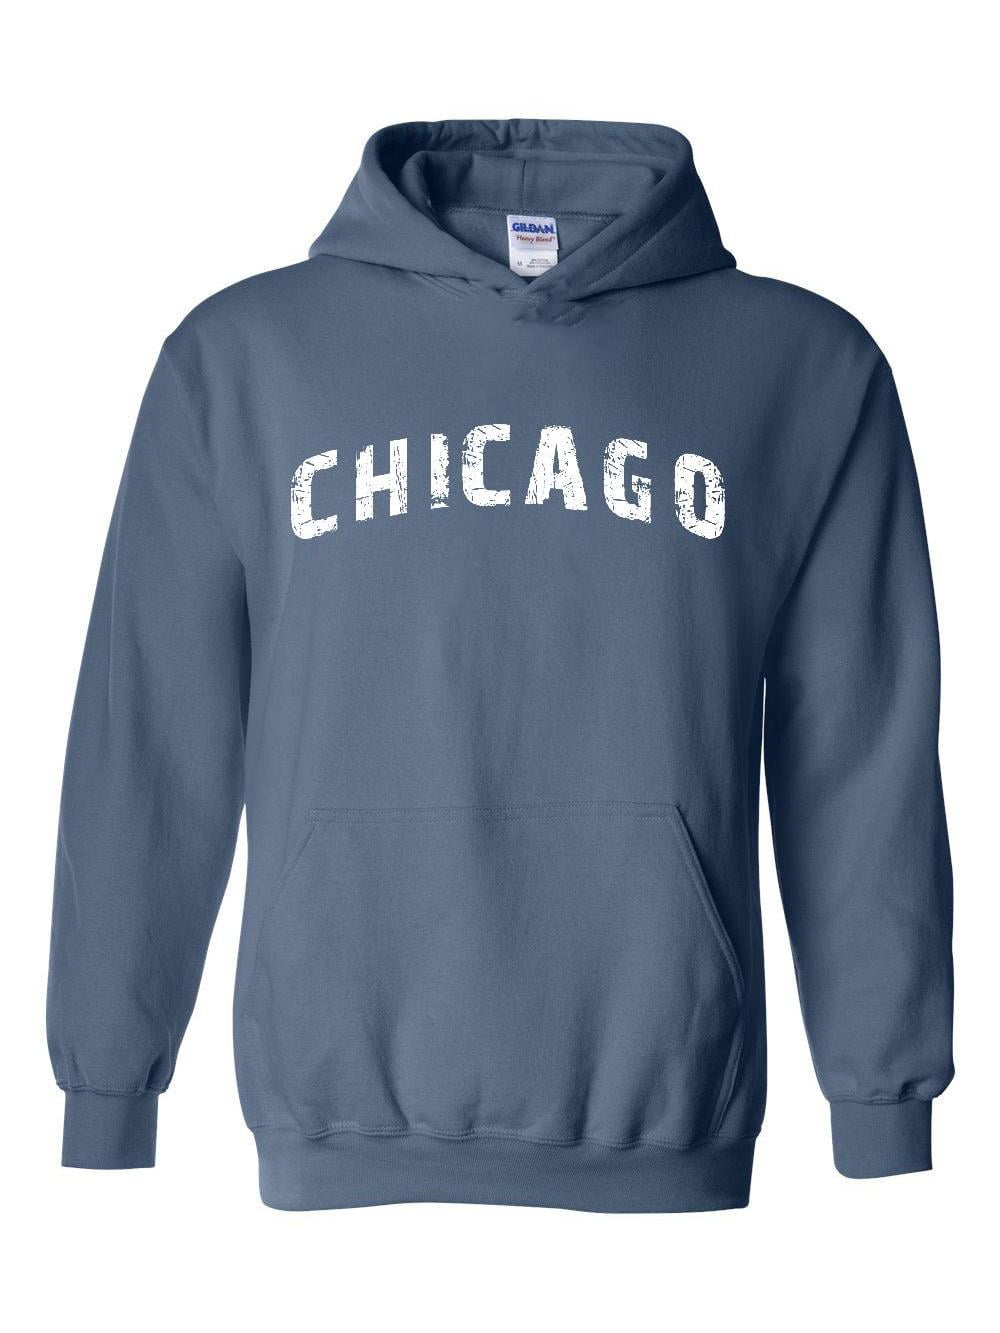 Mom's Favorite - Unisex Chicago Hoodie Sweatshirt - Walmart.com ...